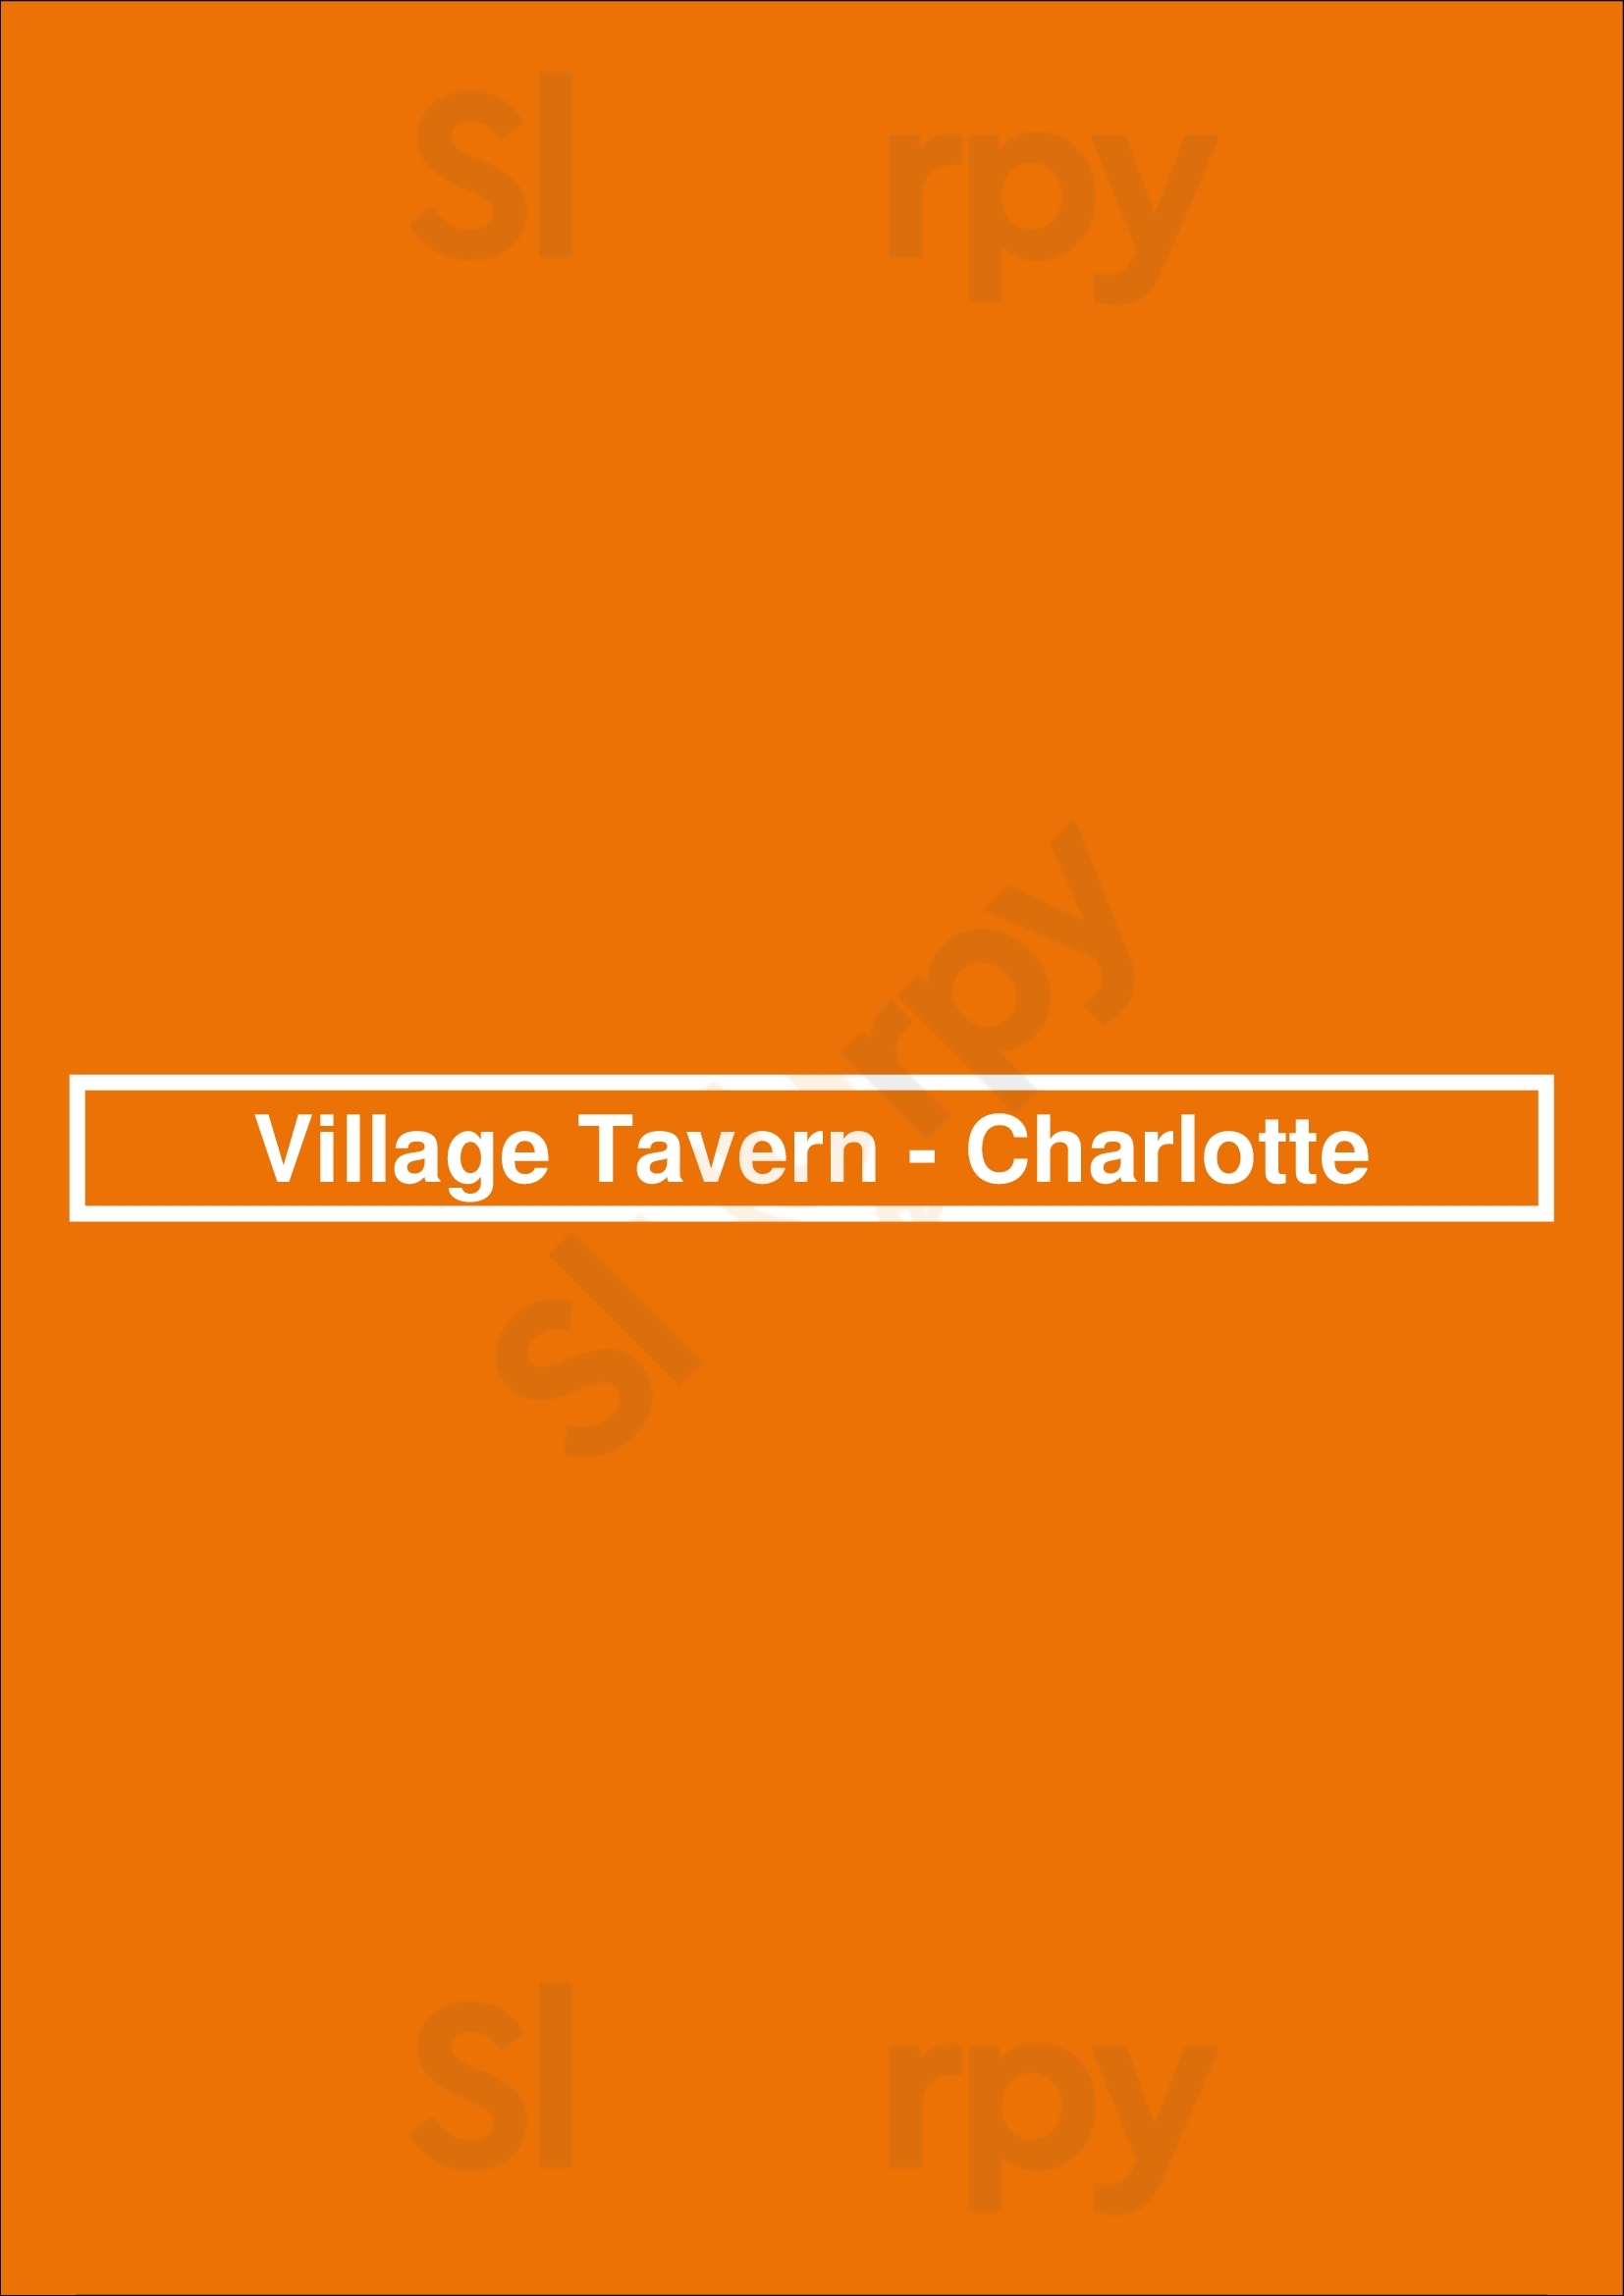 Village Tavern Charlotte Menu - 1